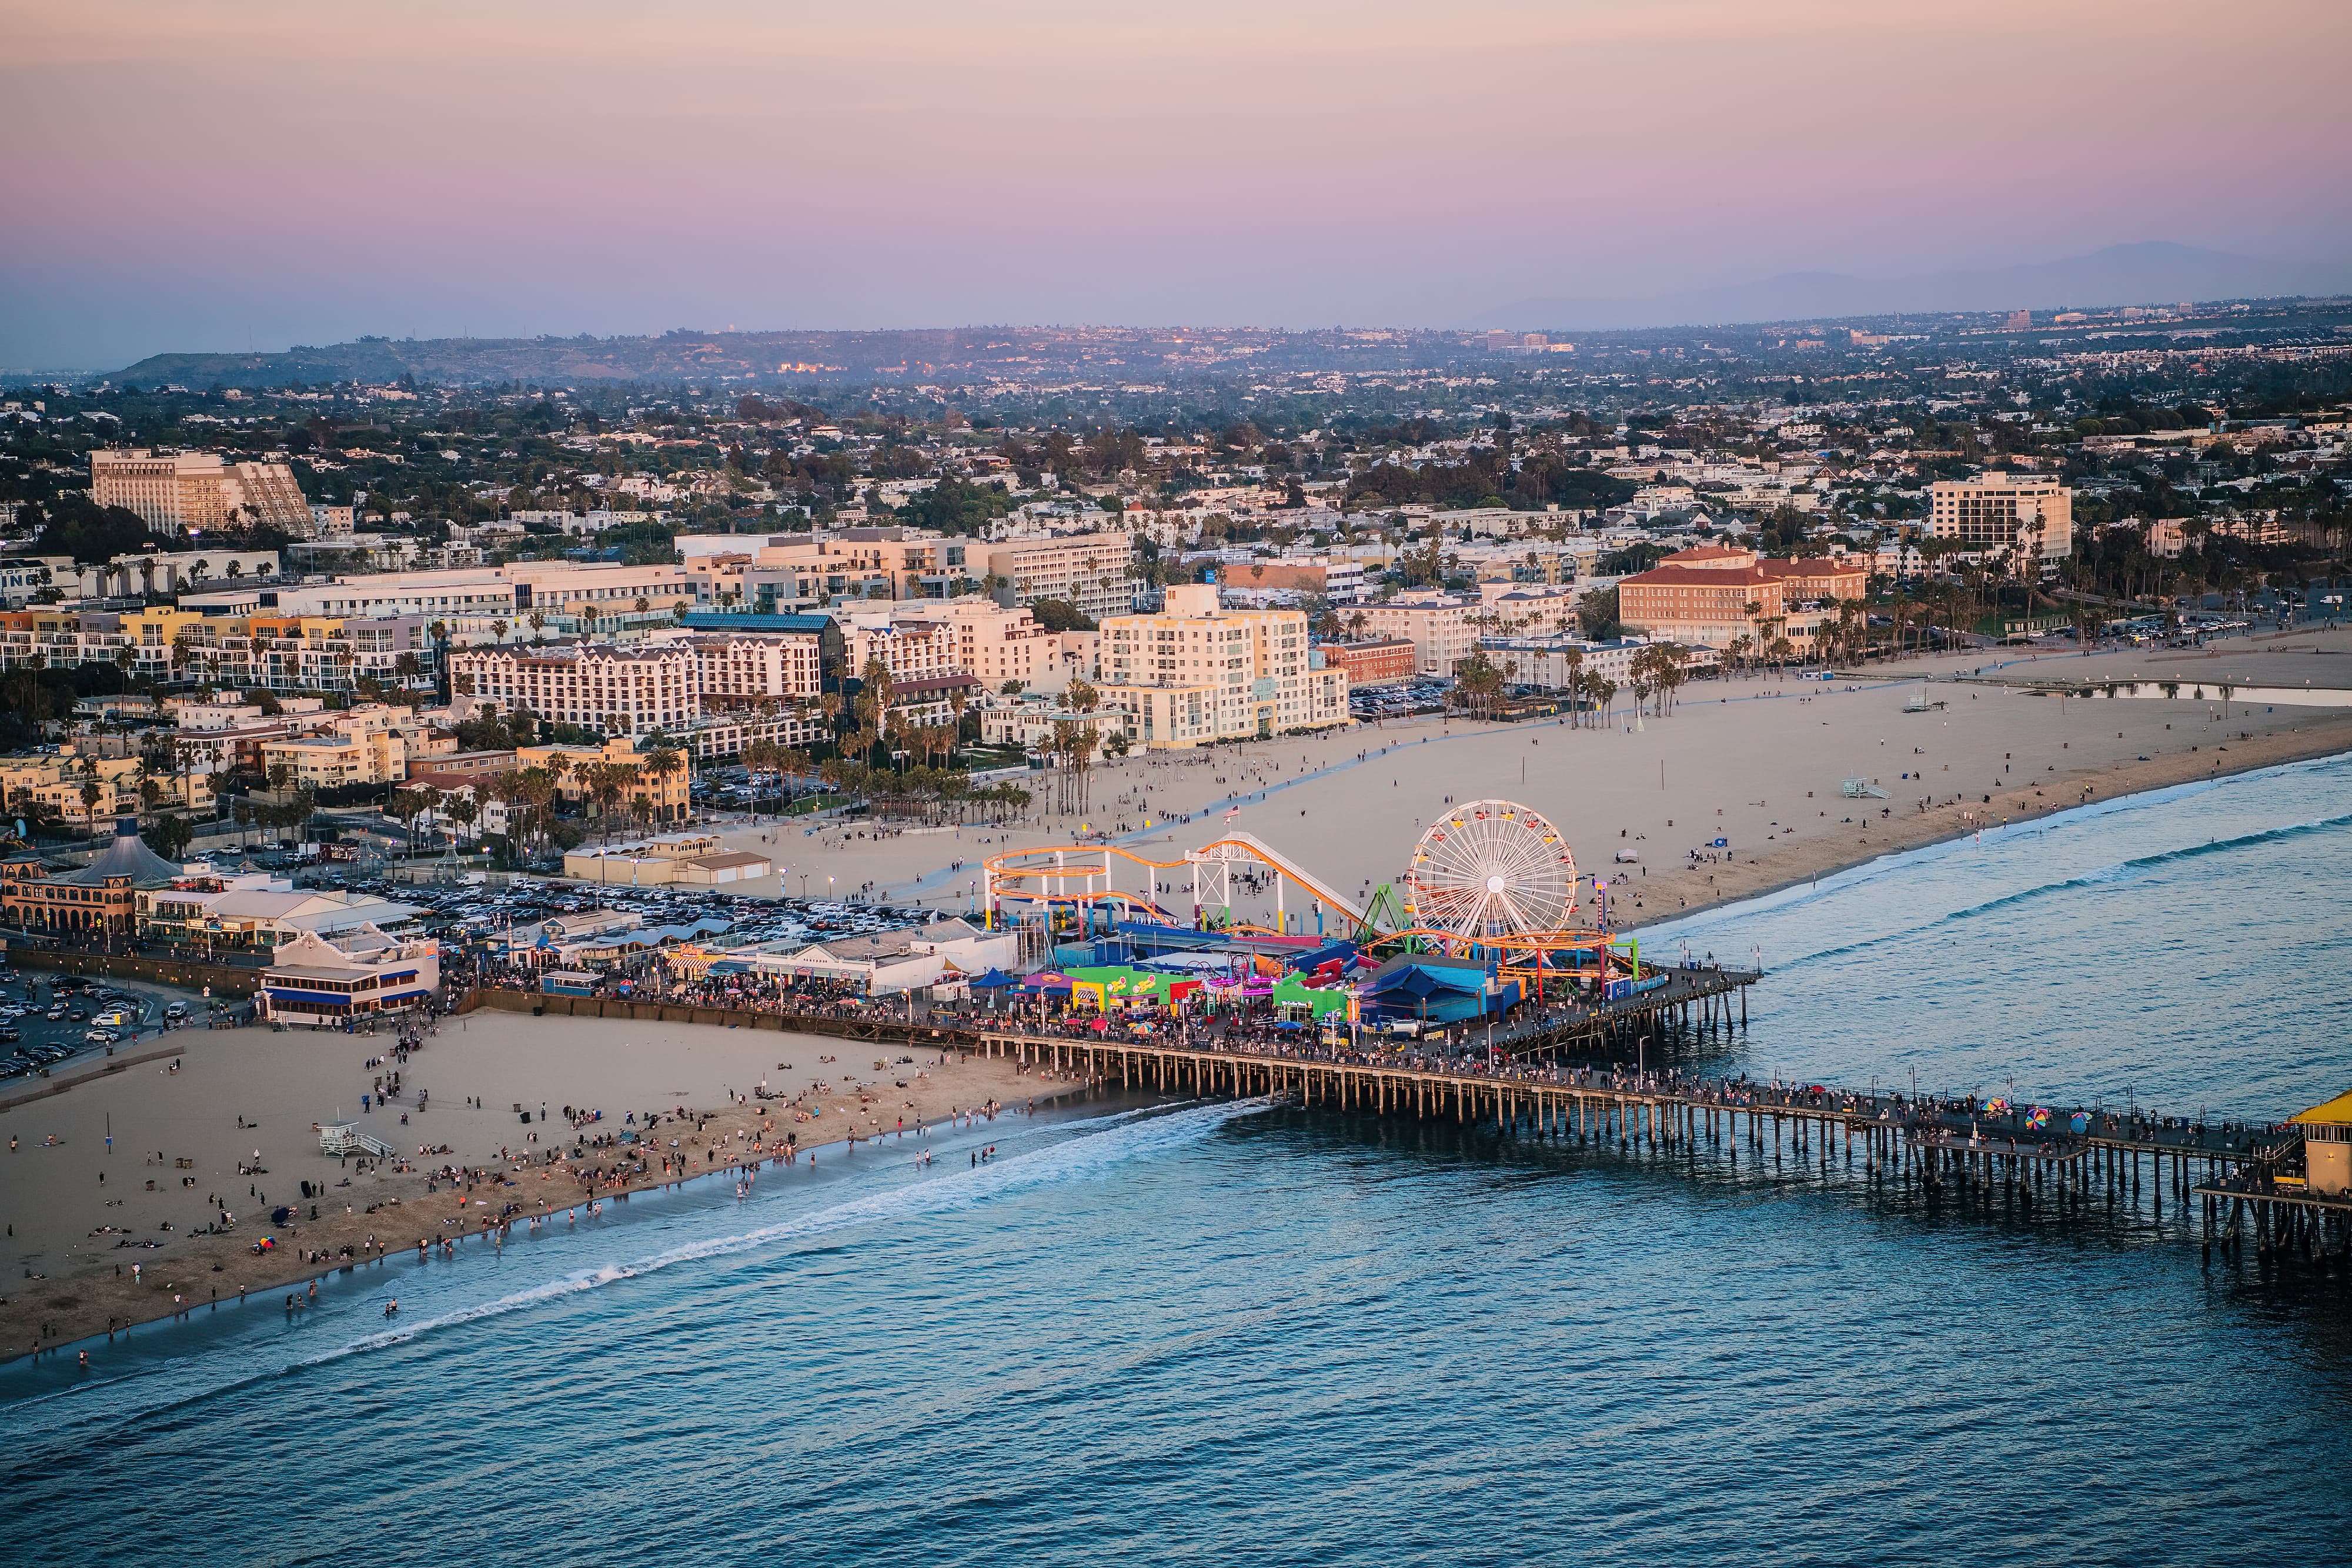 Pier and beach with amusement park, high angle, Santa Monica, California, USA